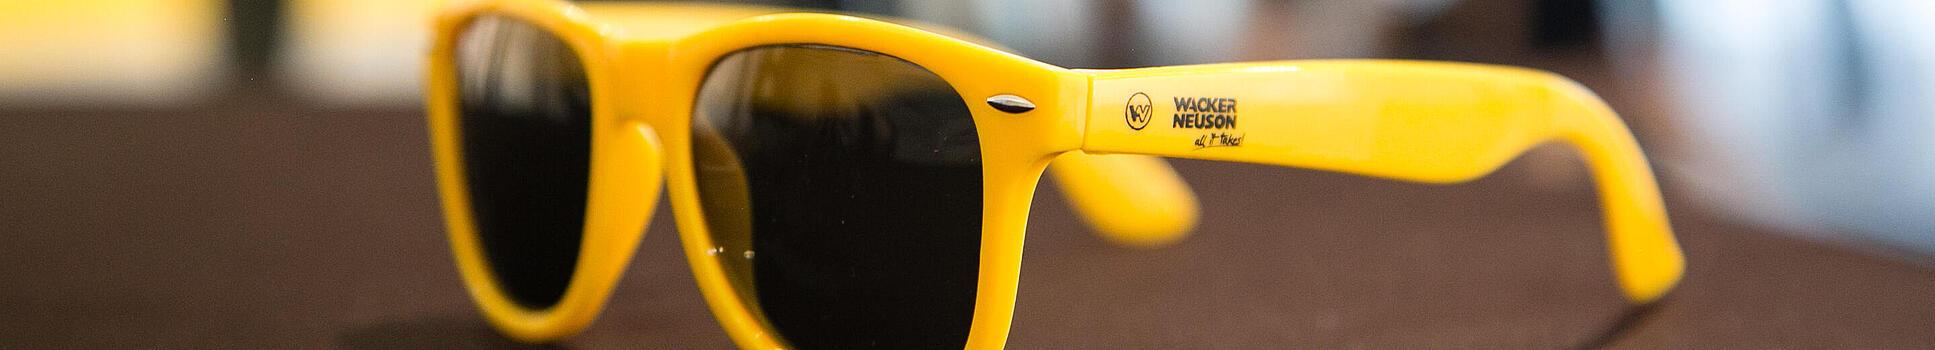 Gele zonnebril met Wacker Neuson-logo.